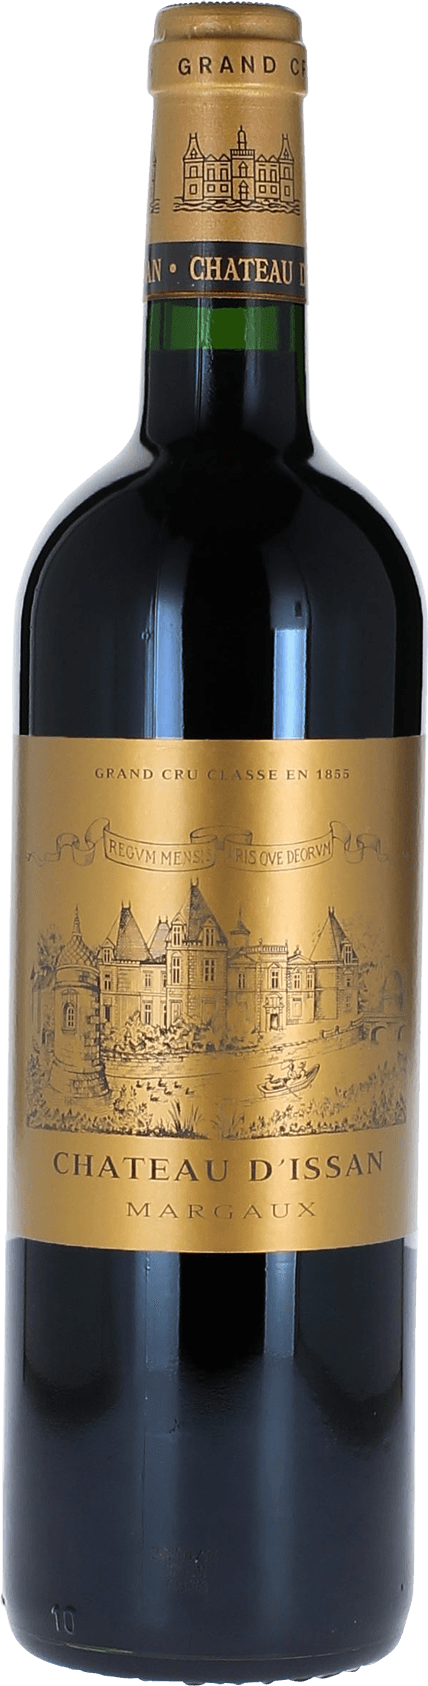 Issan 2018 3me Grand cru class Margaux, Bordeaux rouge